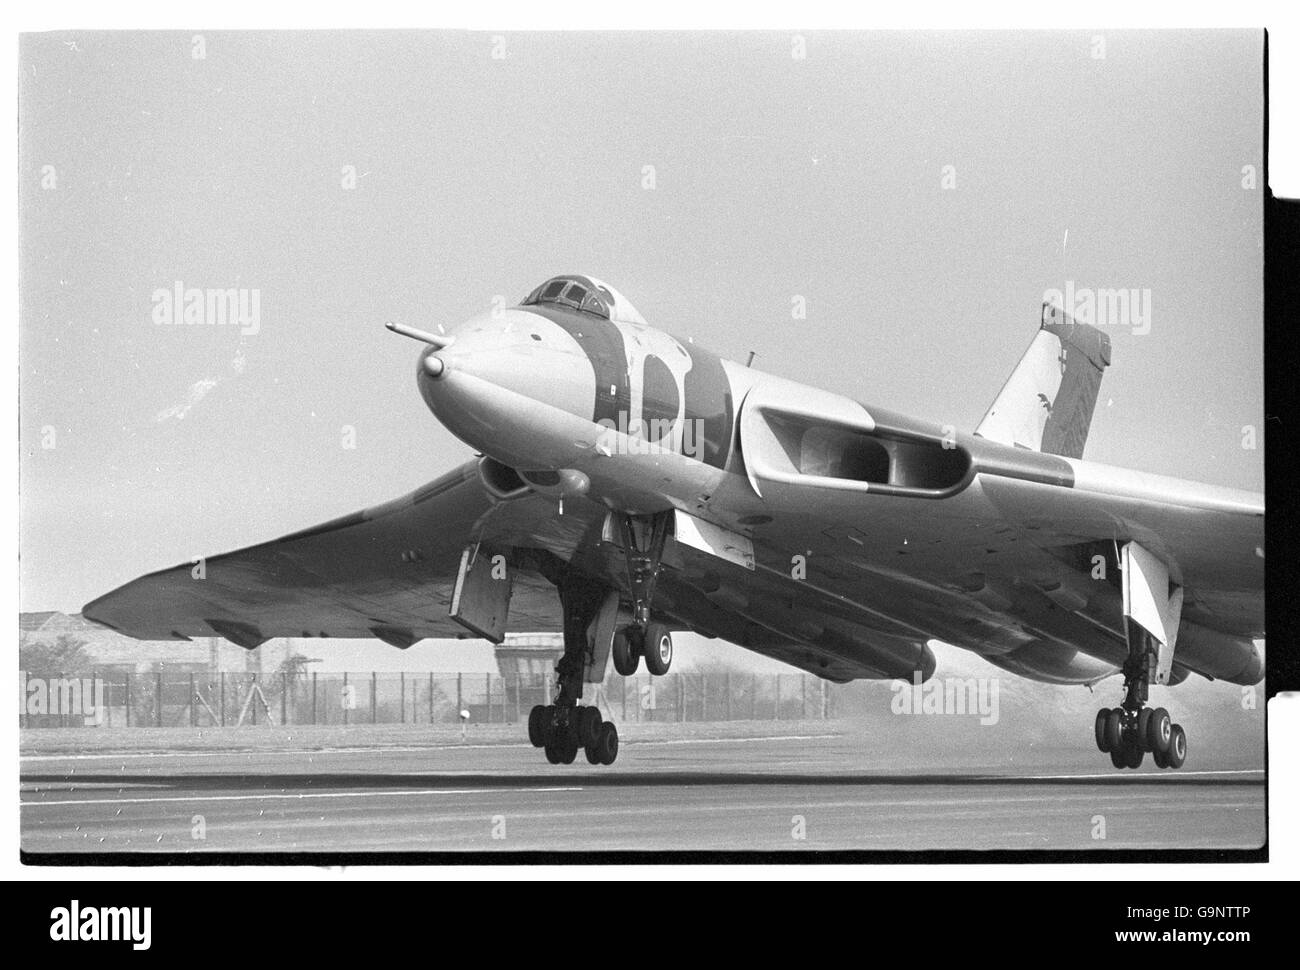 A Vulcan bomber lifting off from its base at RAF Waddington, Lincolnshire. Stock Photo